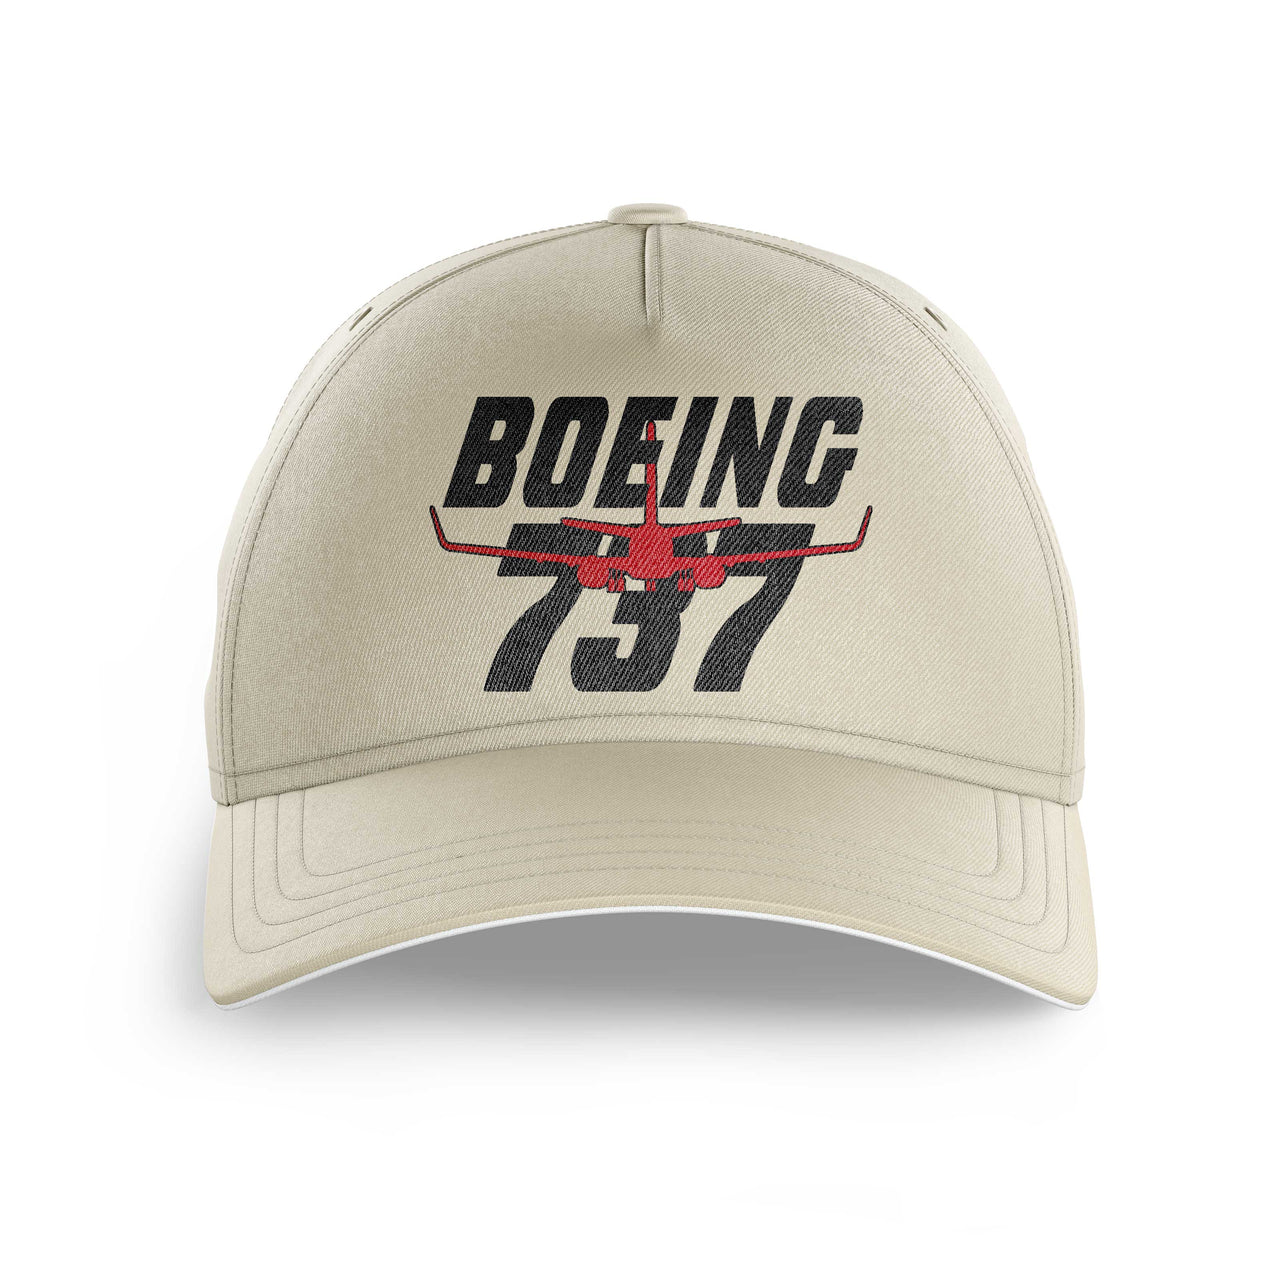 Amazing Boeing 737 Printed Hats